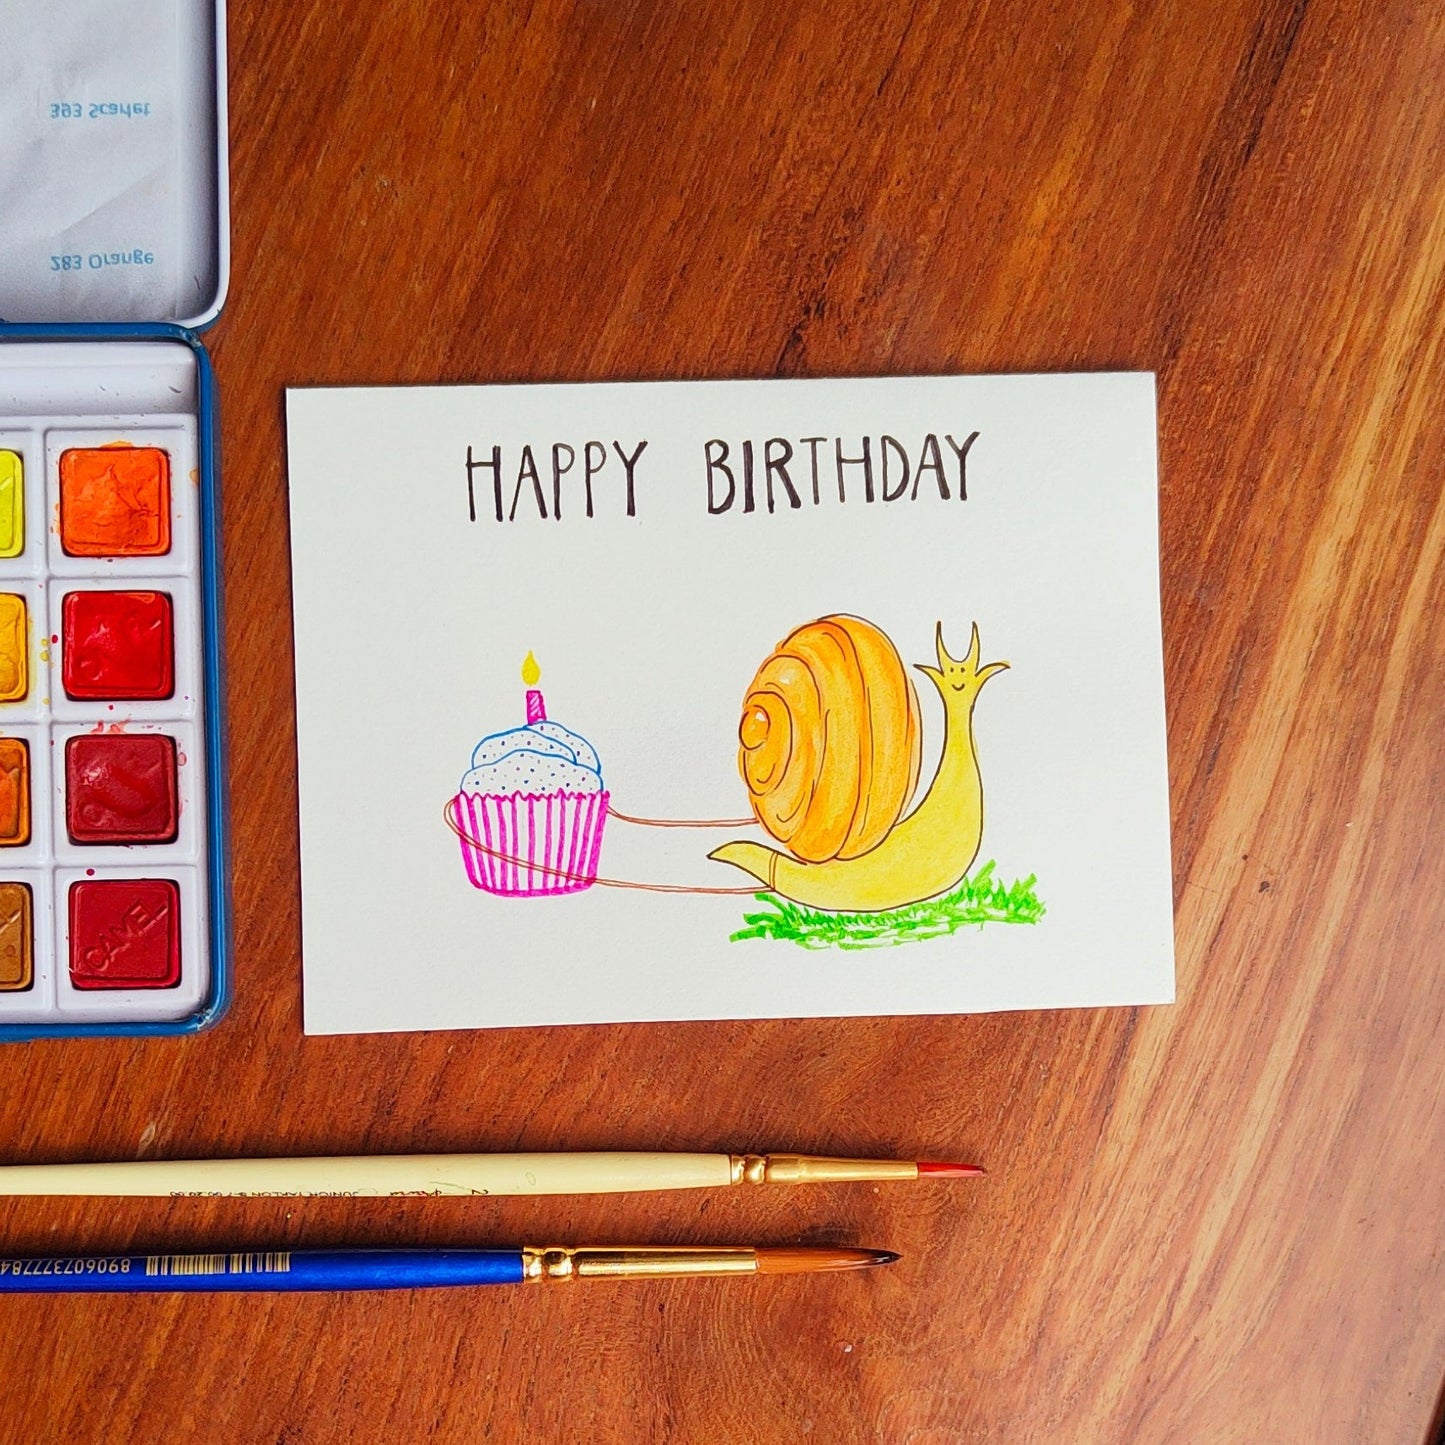 Snail: Happy Birthday Card